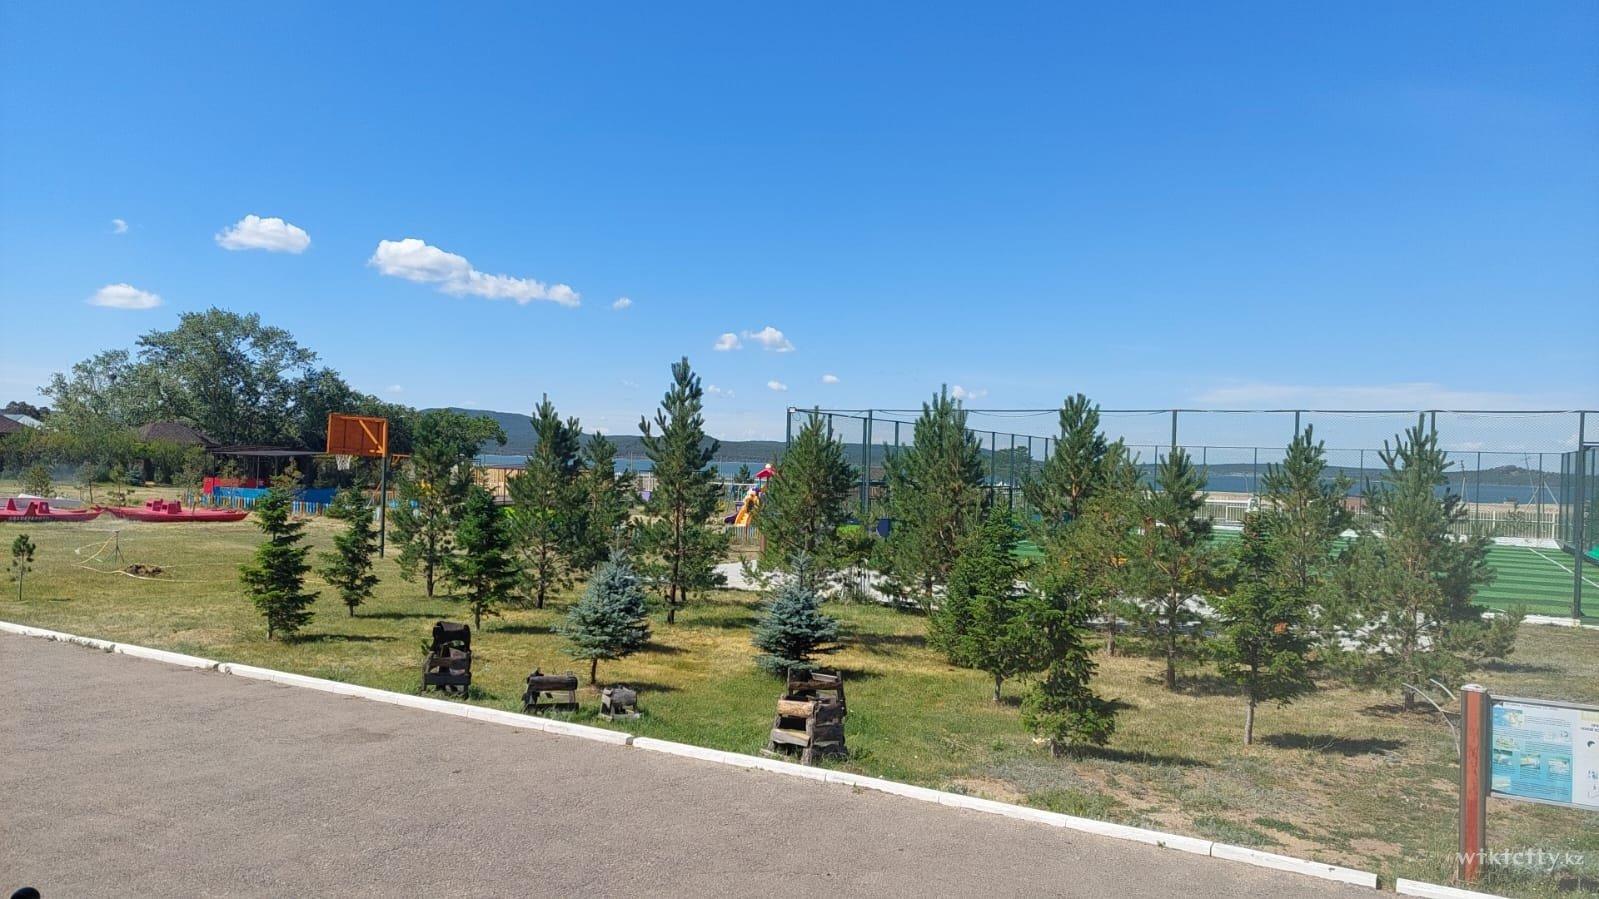 Фото Zerendi park детский лагерь - Astana. озеро как на ладони